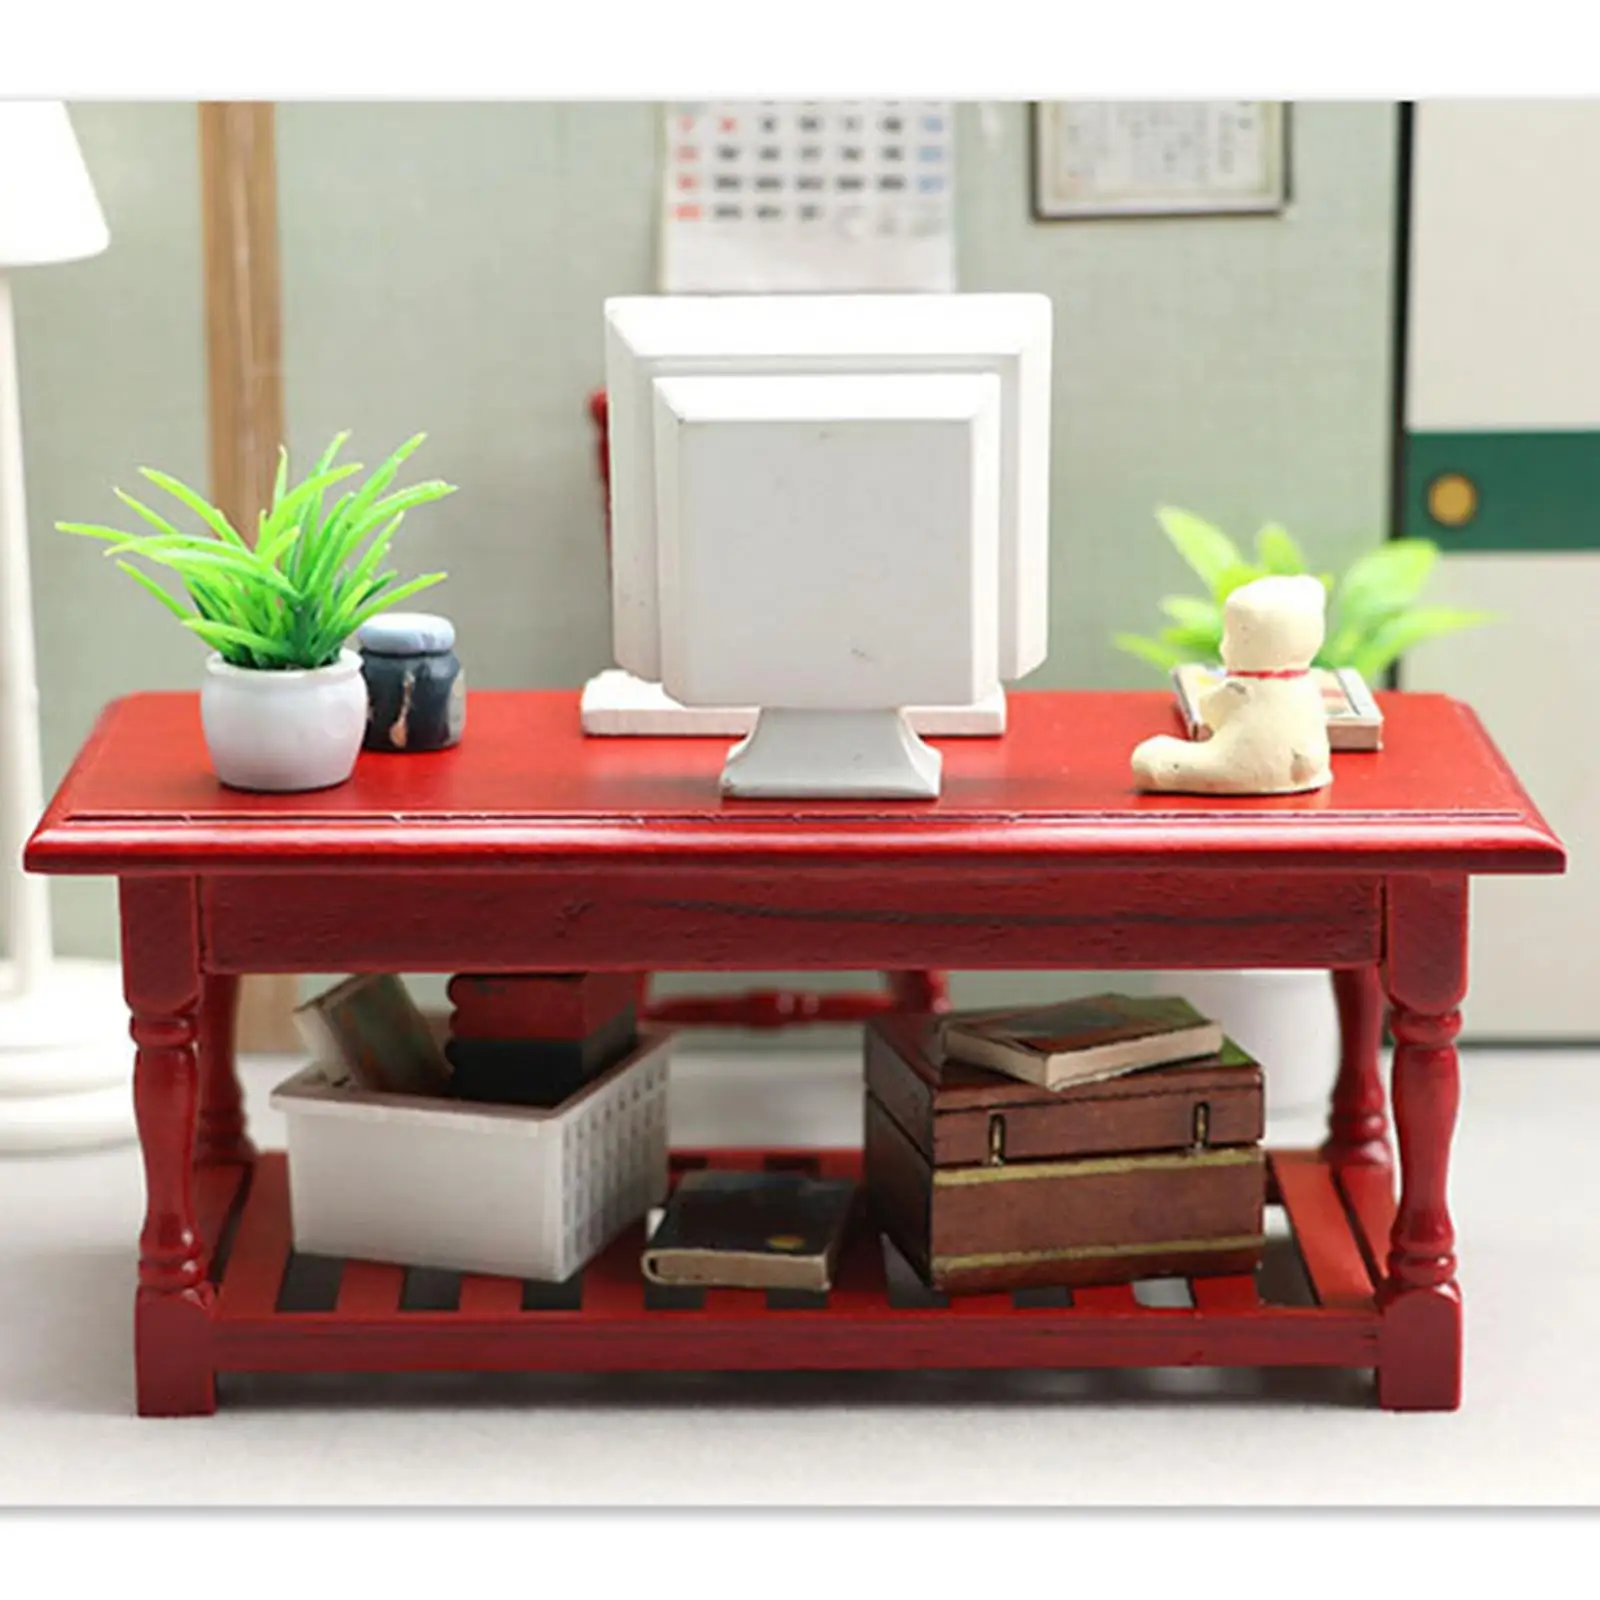 1/12 Dollhouse Miniature Table, Dollhouse Decoration Accessories Dollhouse Furniture Kids Pretend   Table Teatable